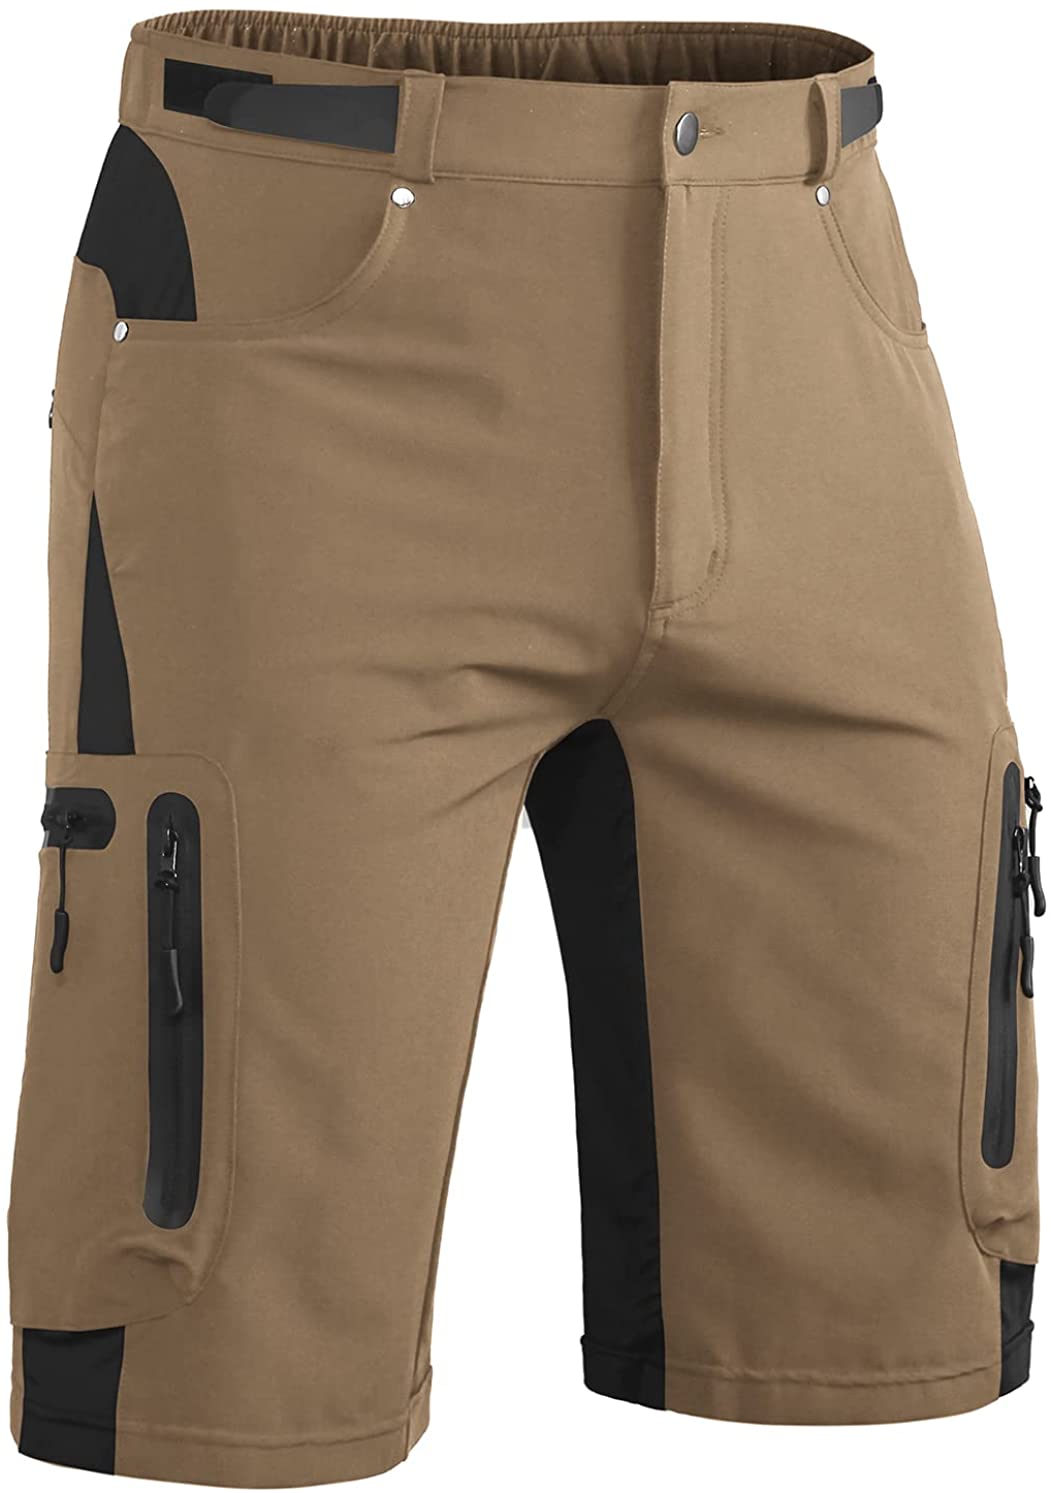 Hiauspor Men's Hiking Cargo Shorts Lightweight Quick Dry Stretch MTB Shorts for Goft Fishing Tactical Outdoor Casual Shorts Khaki / Medium